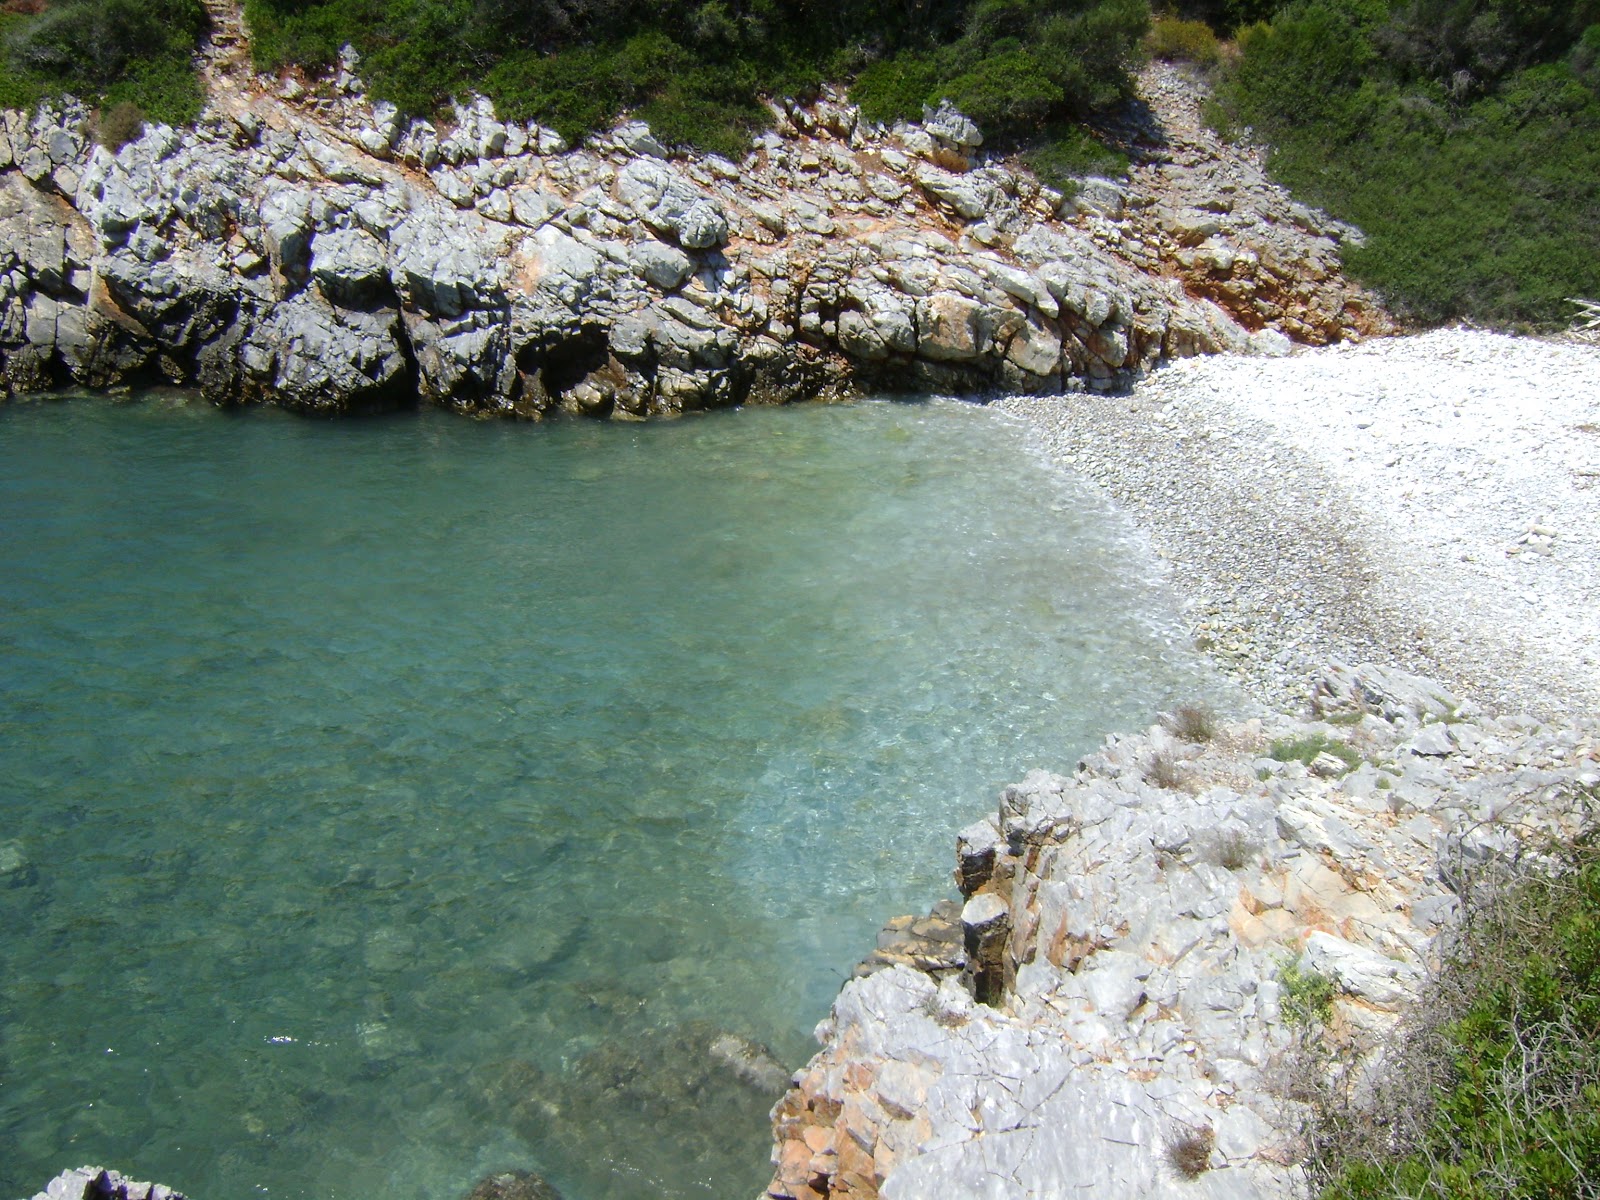 Fotografija Mourtias beach II z sivi kamenček površino